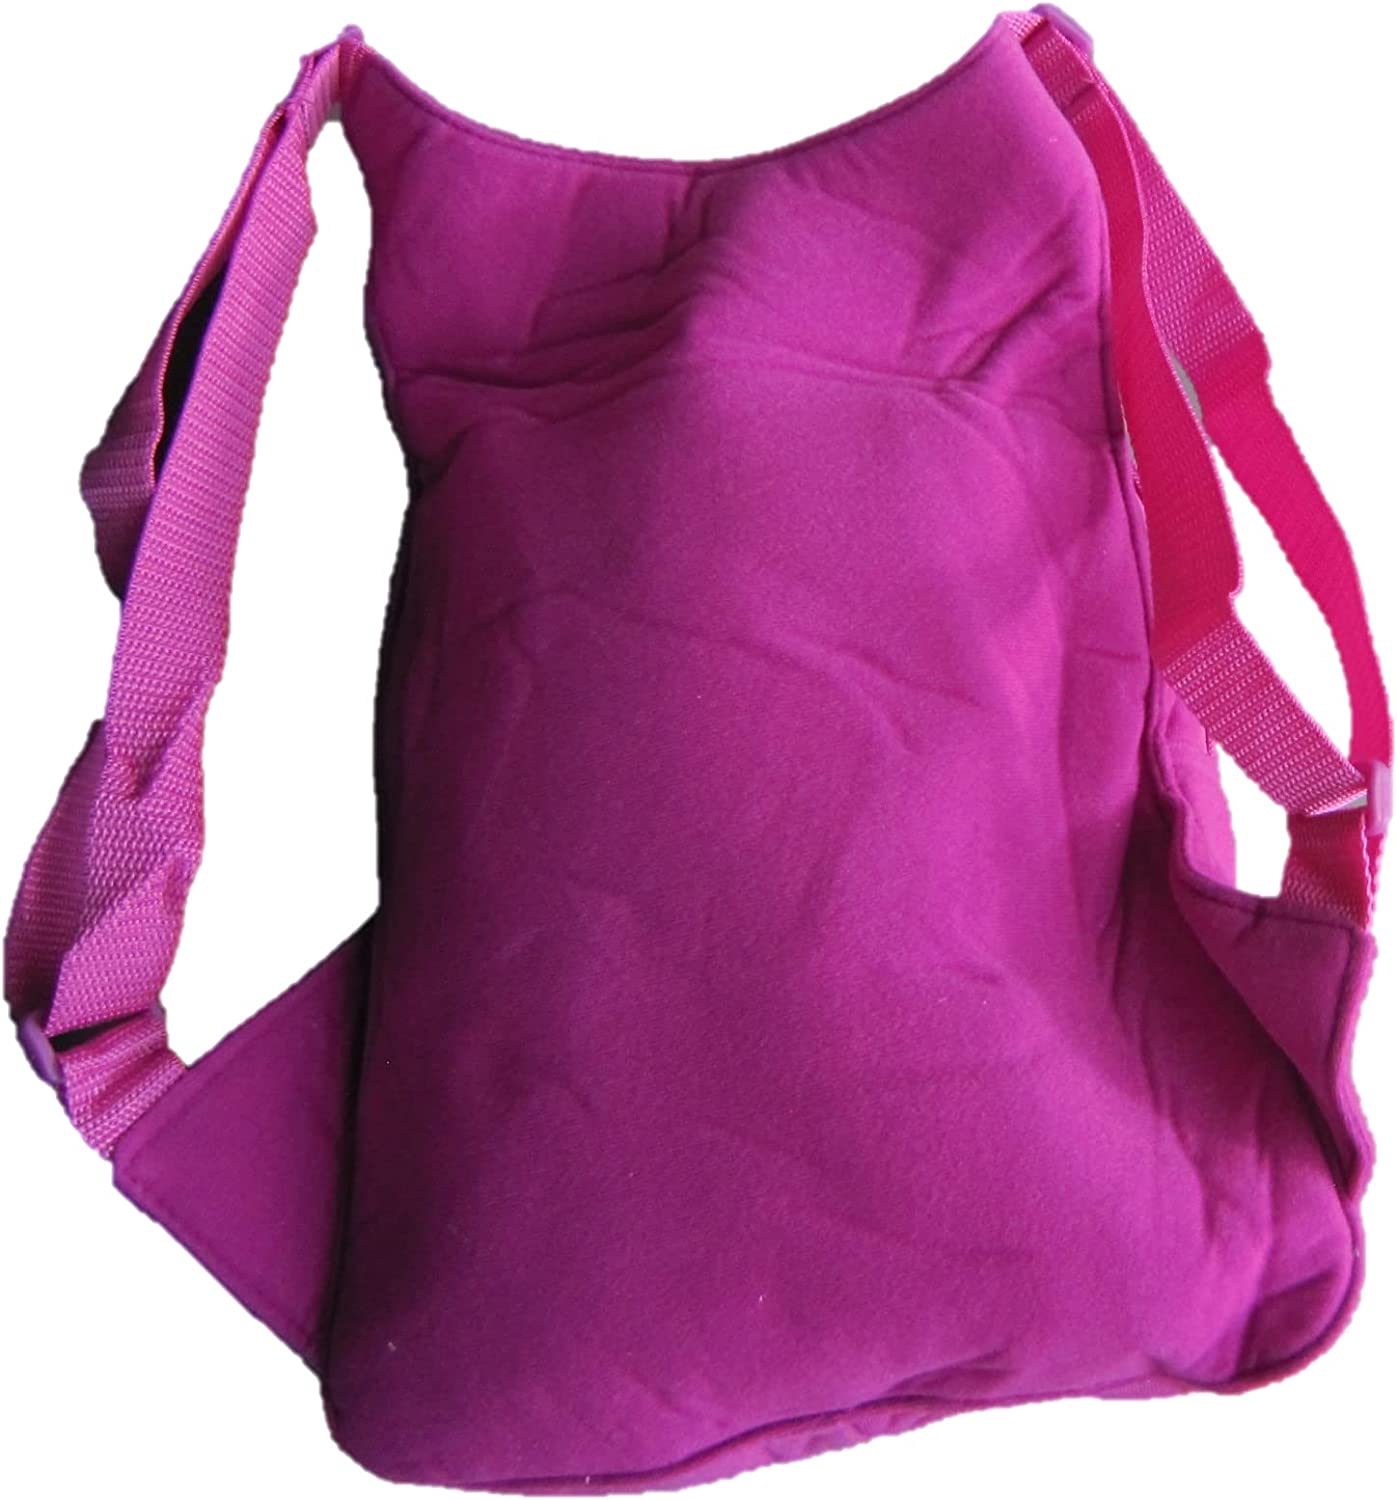 MLP Princess Twilight Sparkle Soft Plush Toy Backpack 3